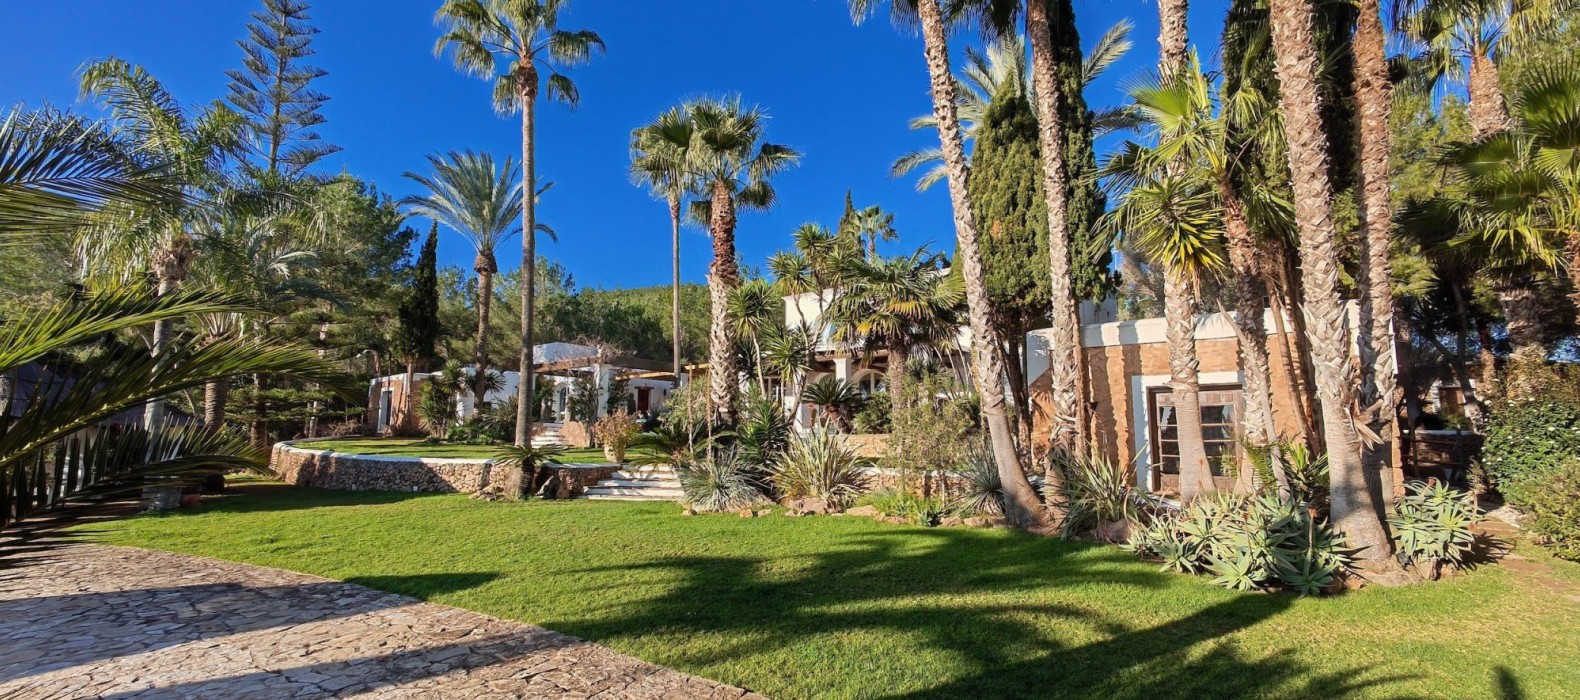 Garden nature palms of Villa Parallel Life in Ibiza